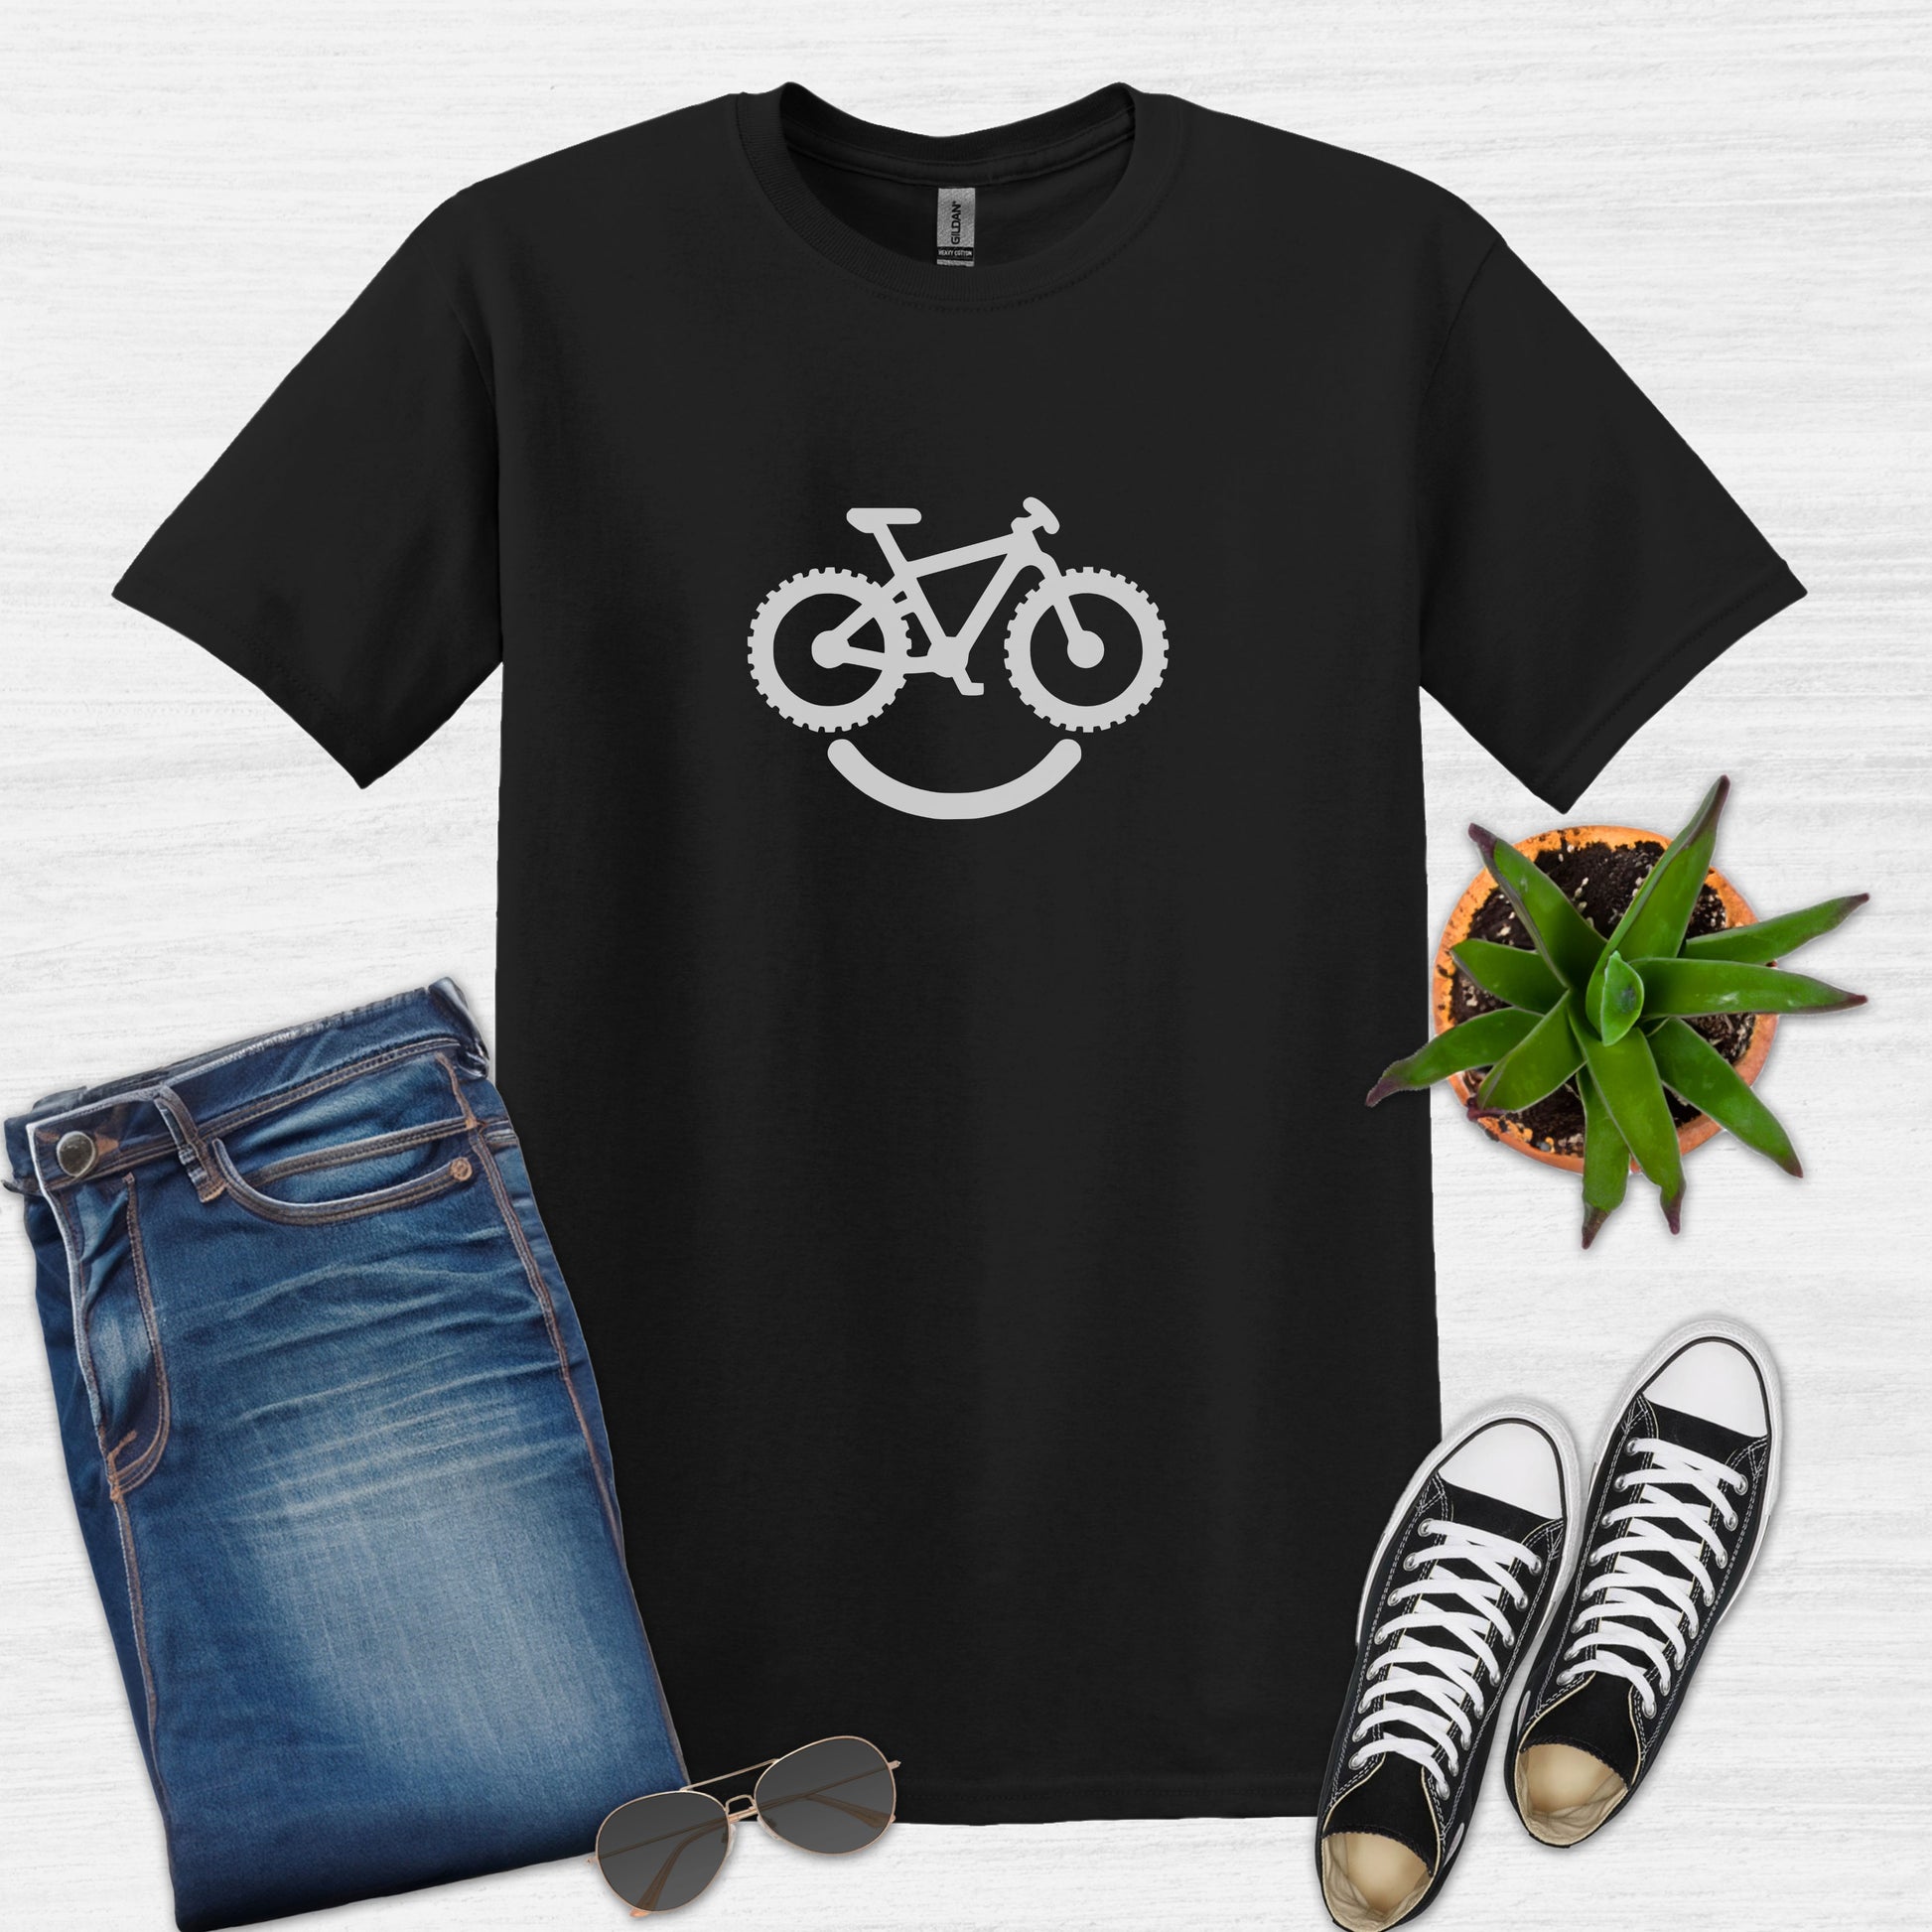 Bike Bliss Happy Mountain Bike T-Shirt for Outdoor Cycling for Men Black